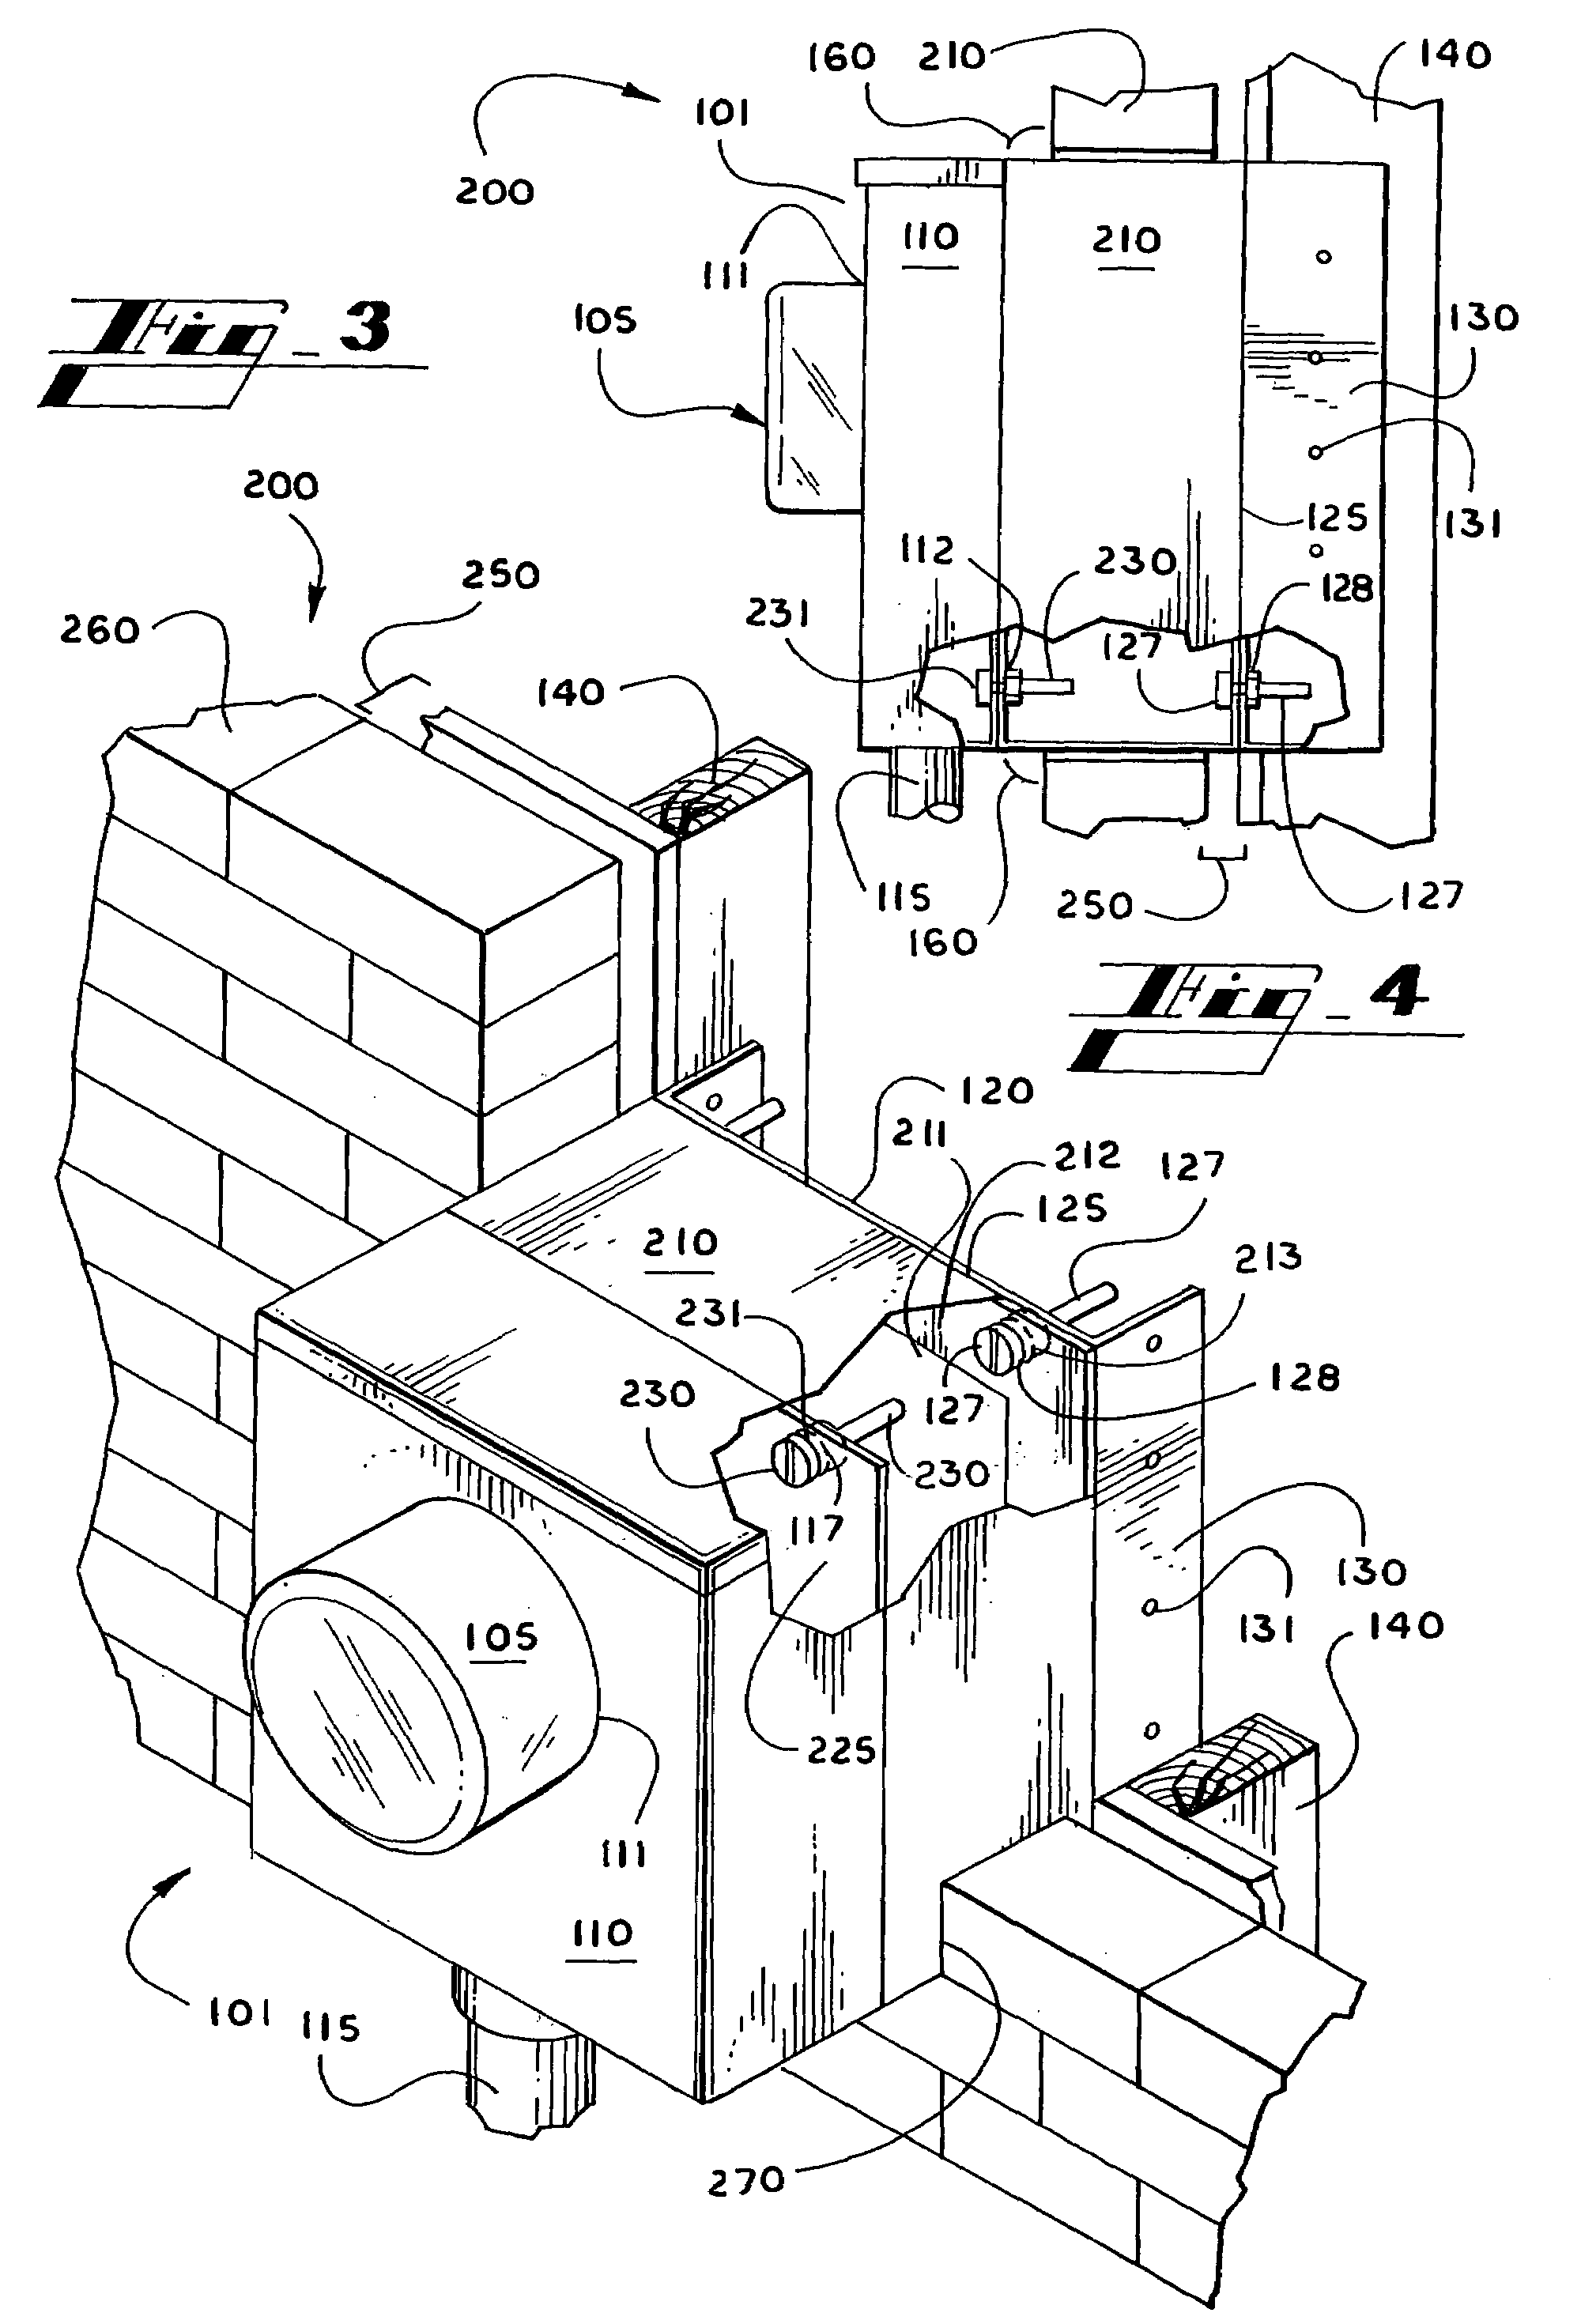 Meter base bracket apparatus and system